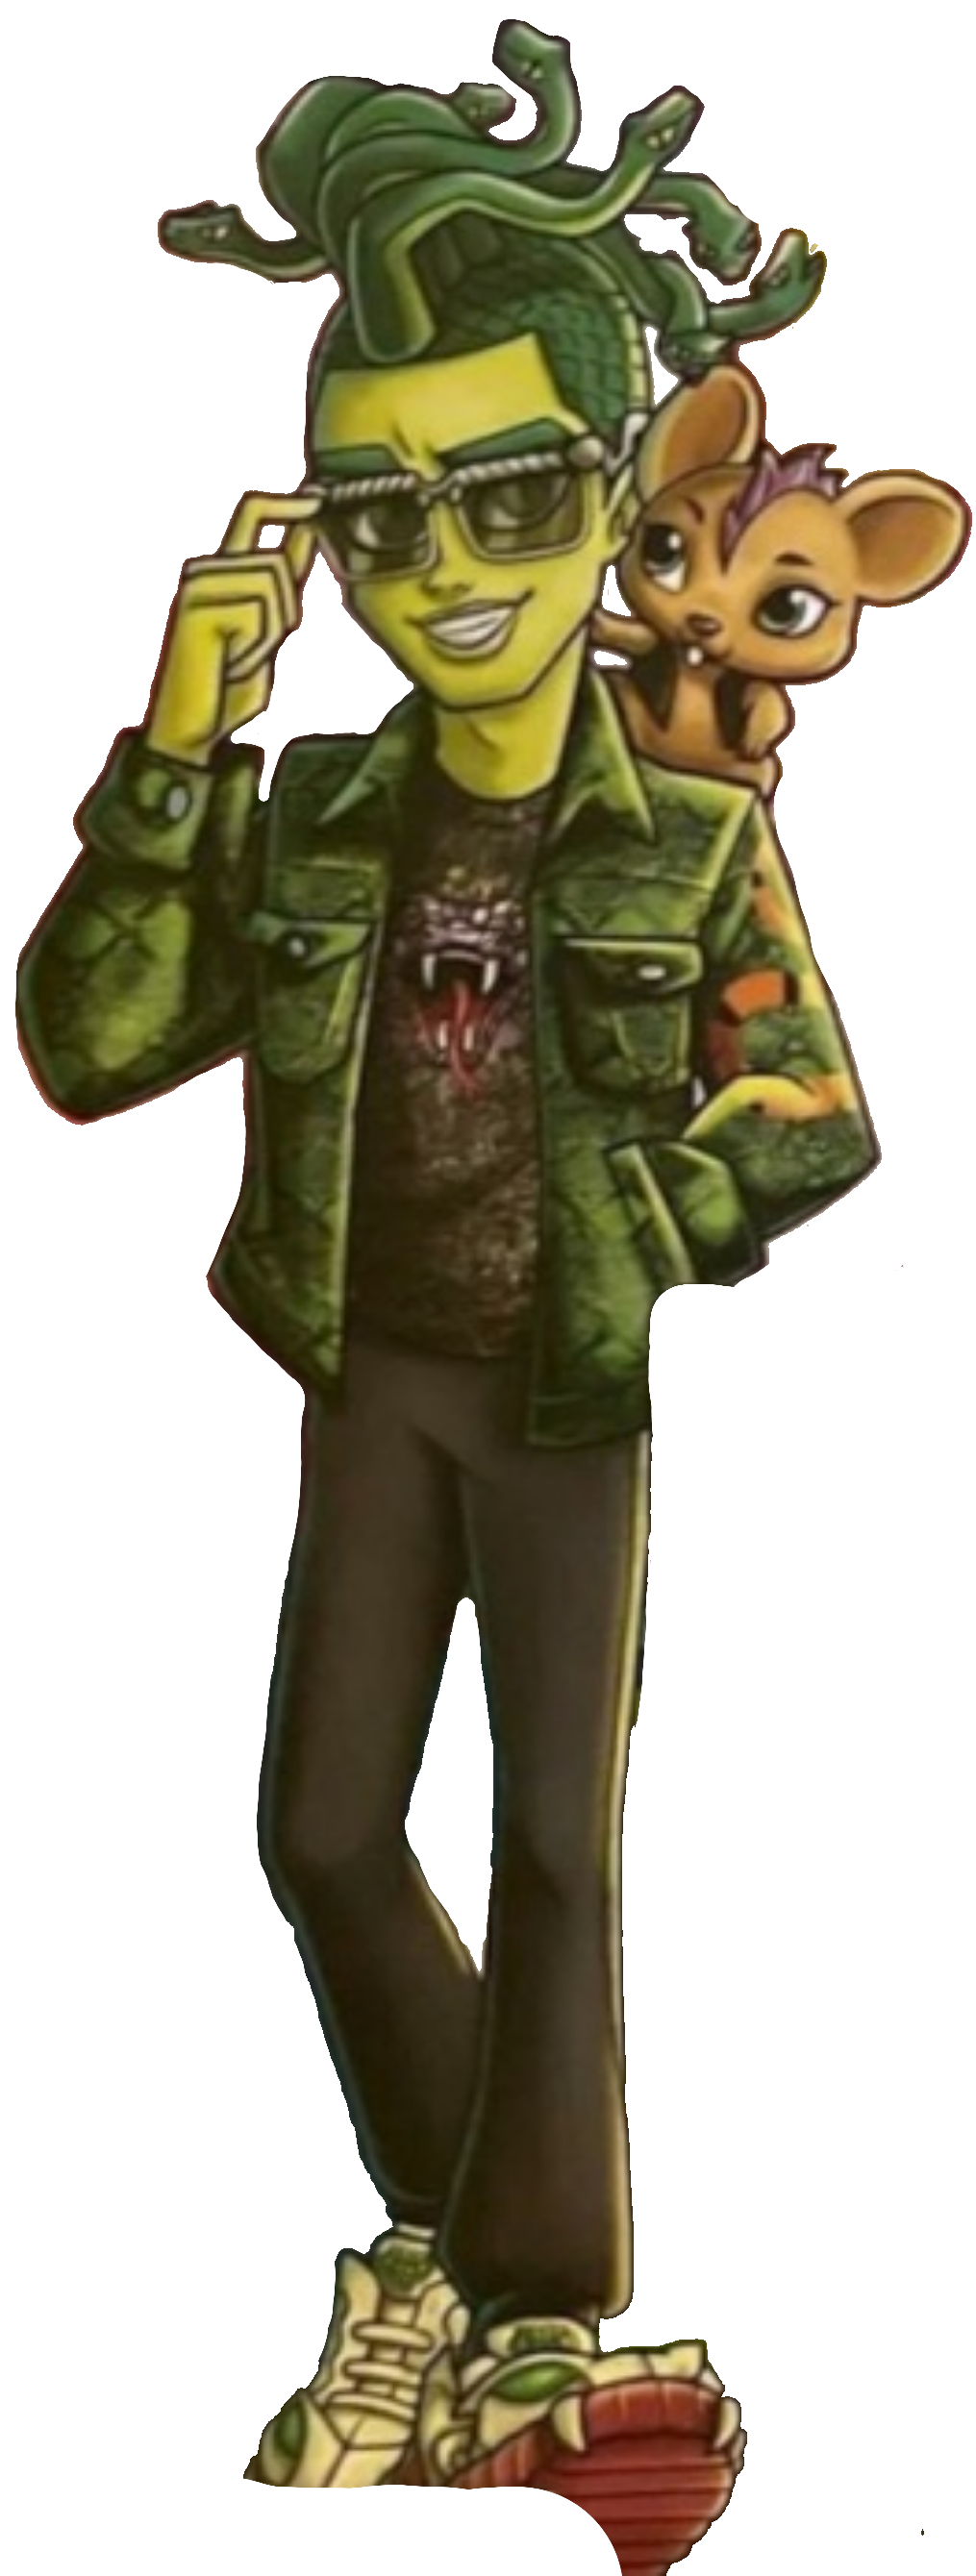 Deuce Gorgon Monster High The Movie Green Jacket